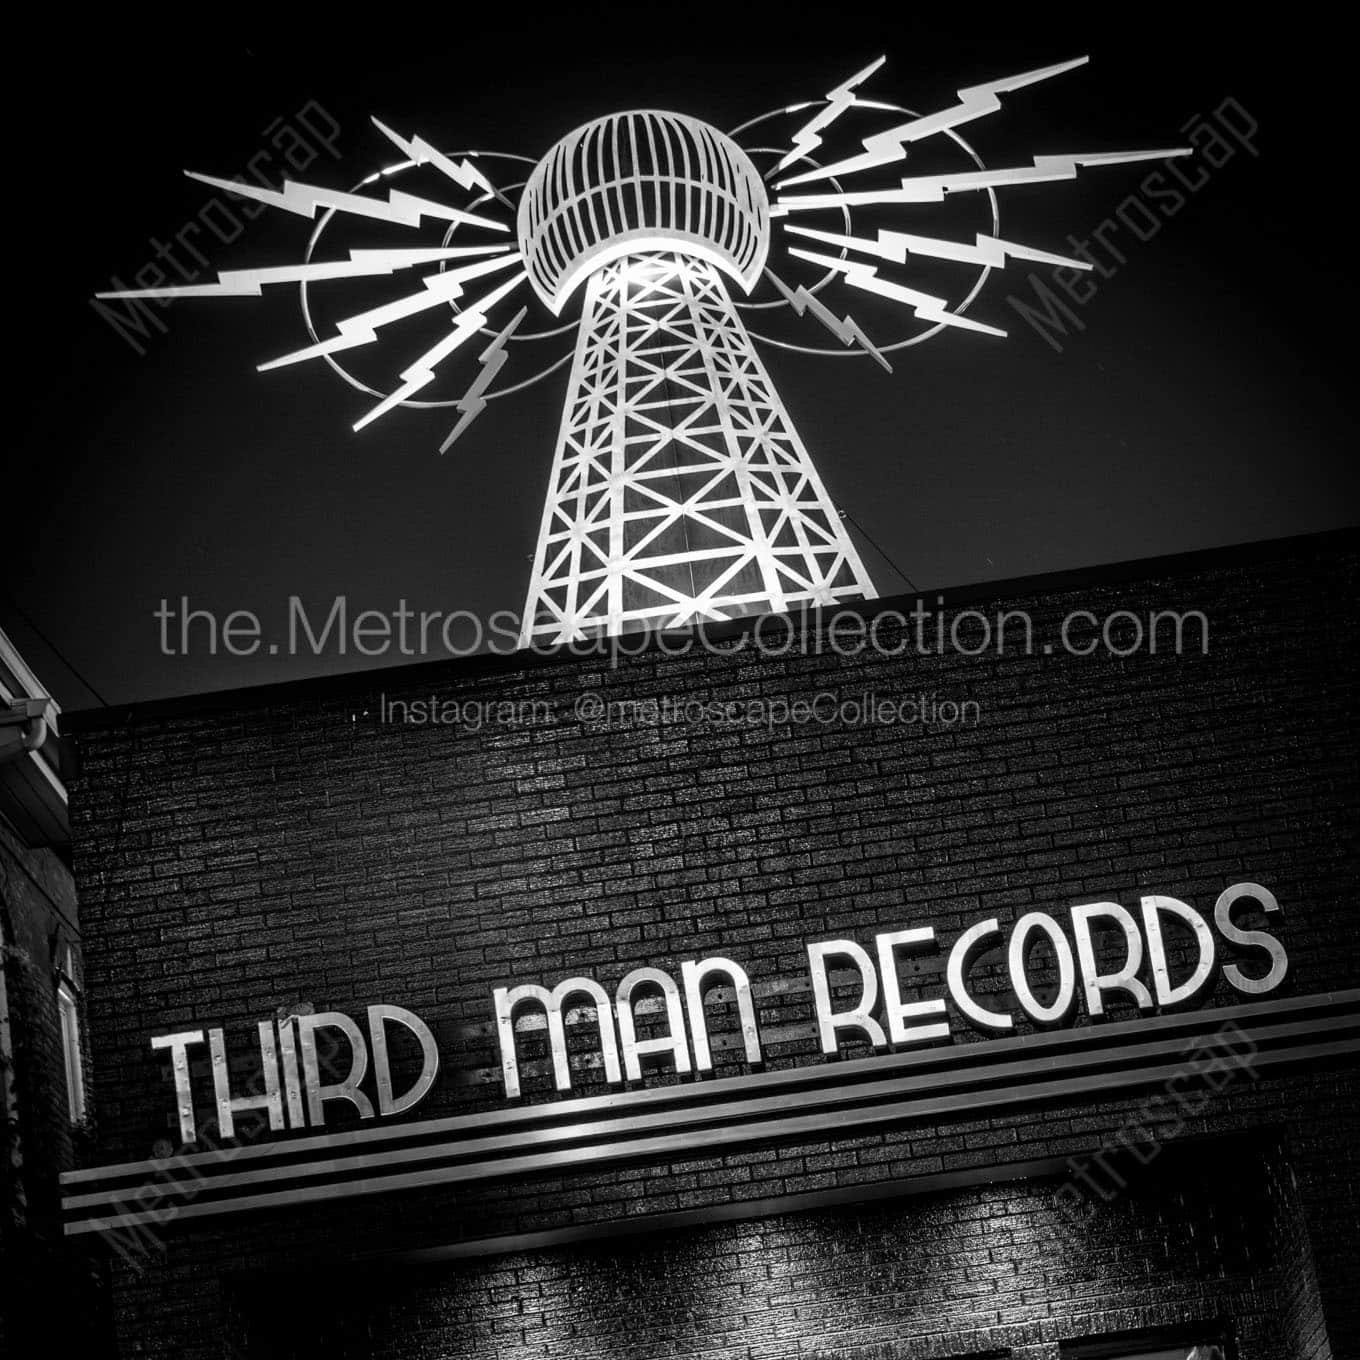 thirdman records Black & White Office Art